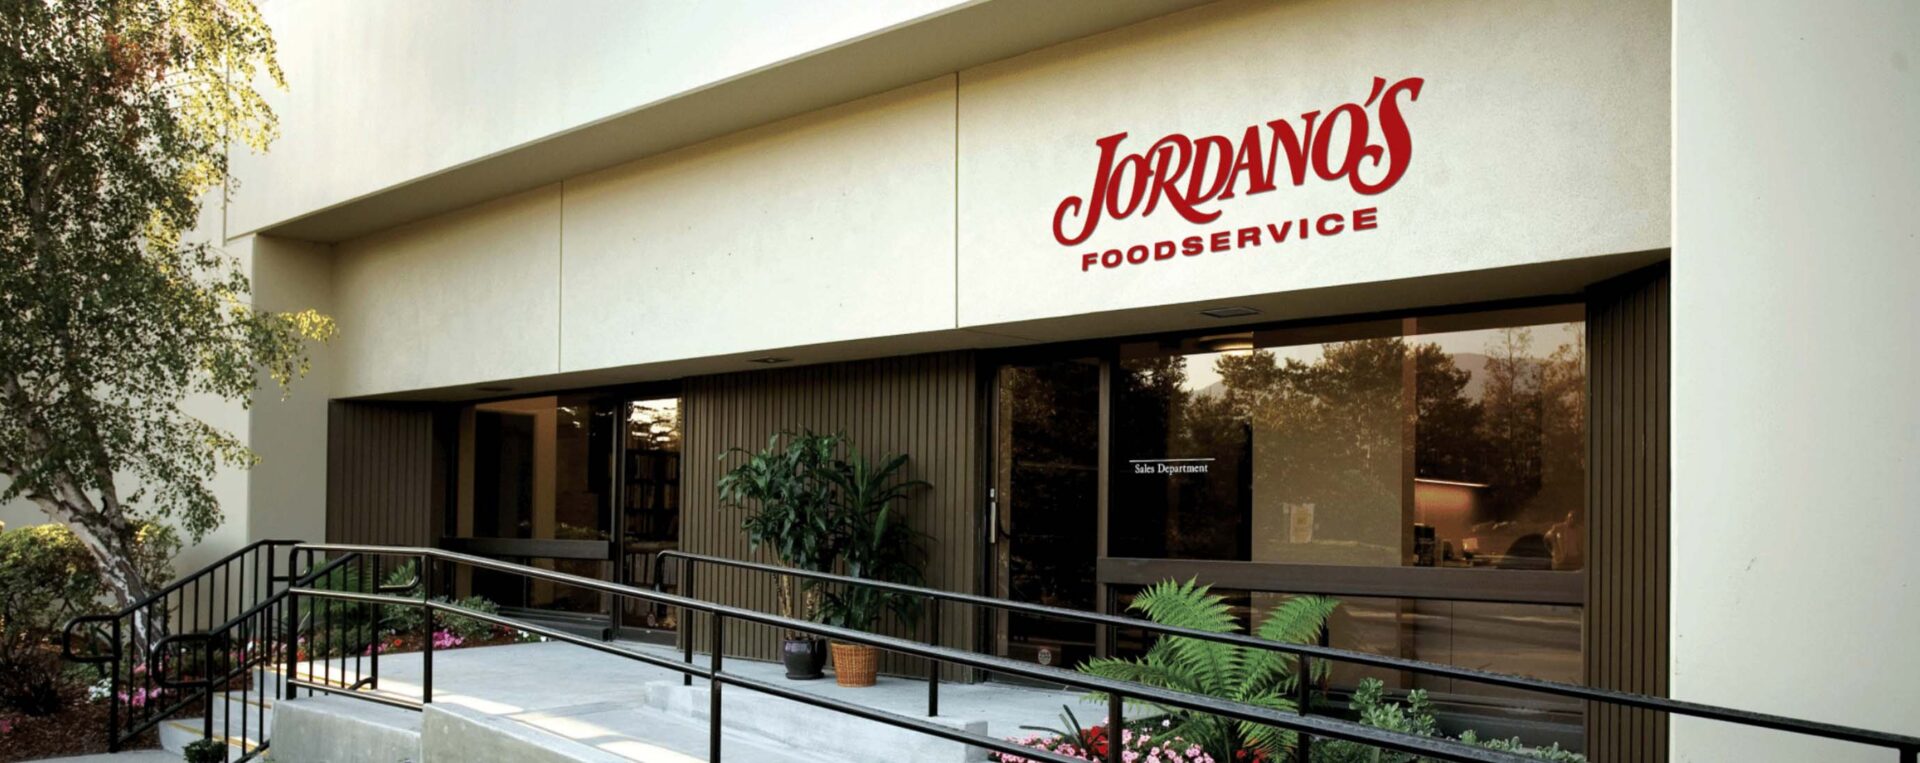 Jordanos Food Service